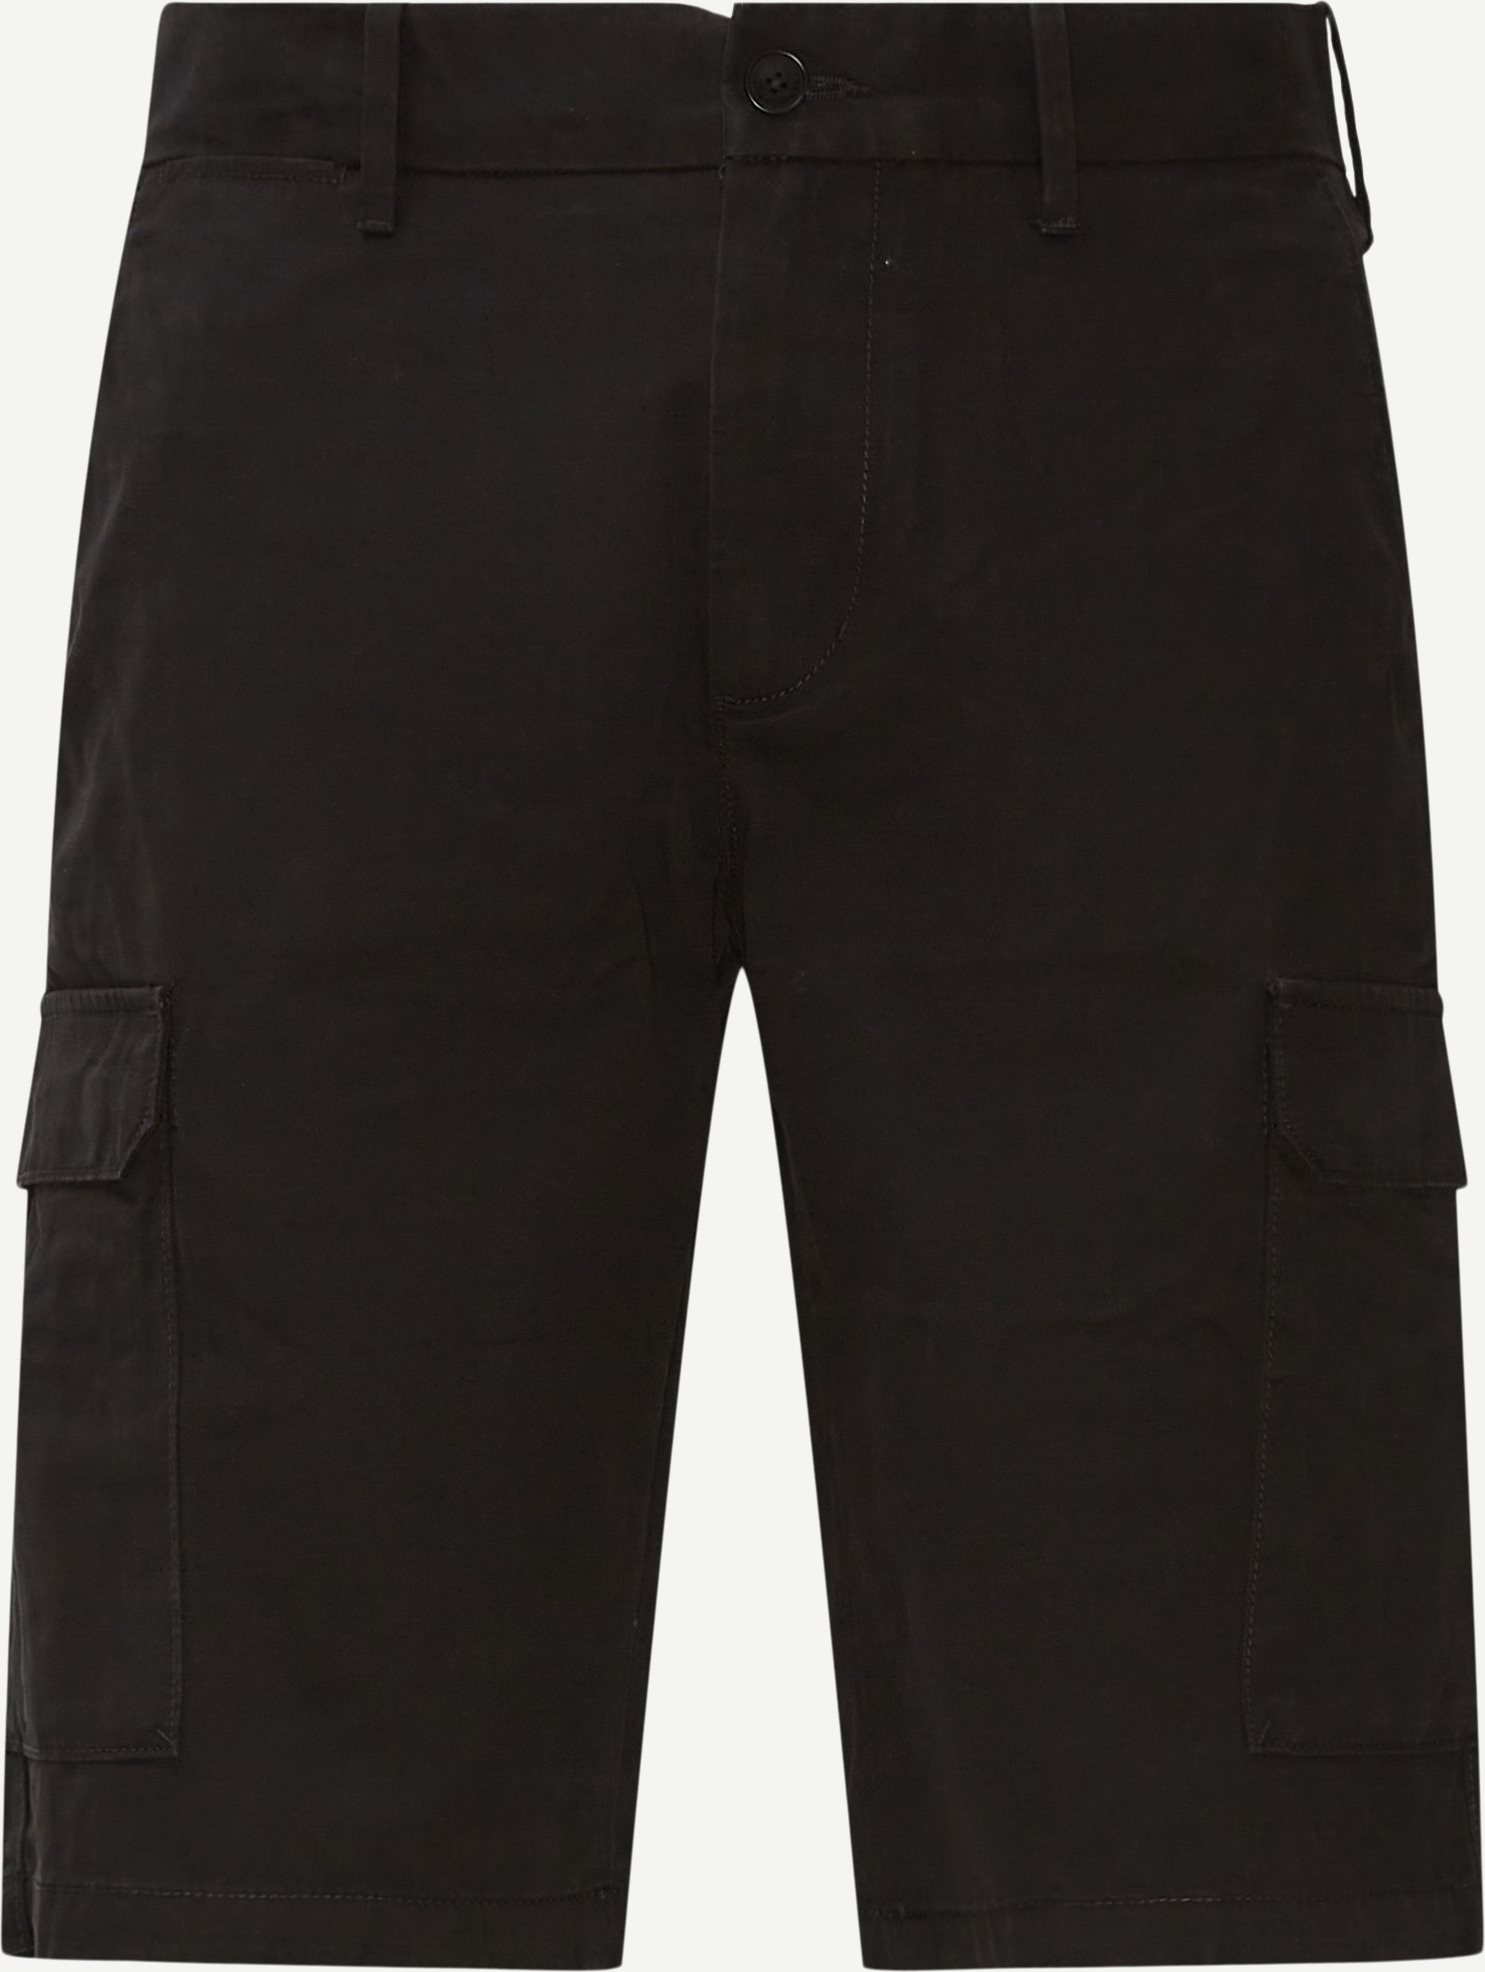 Shorts - Regular fit - Schwarz